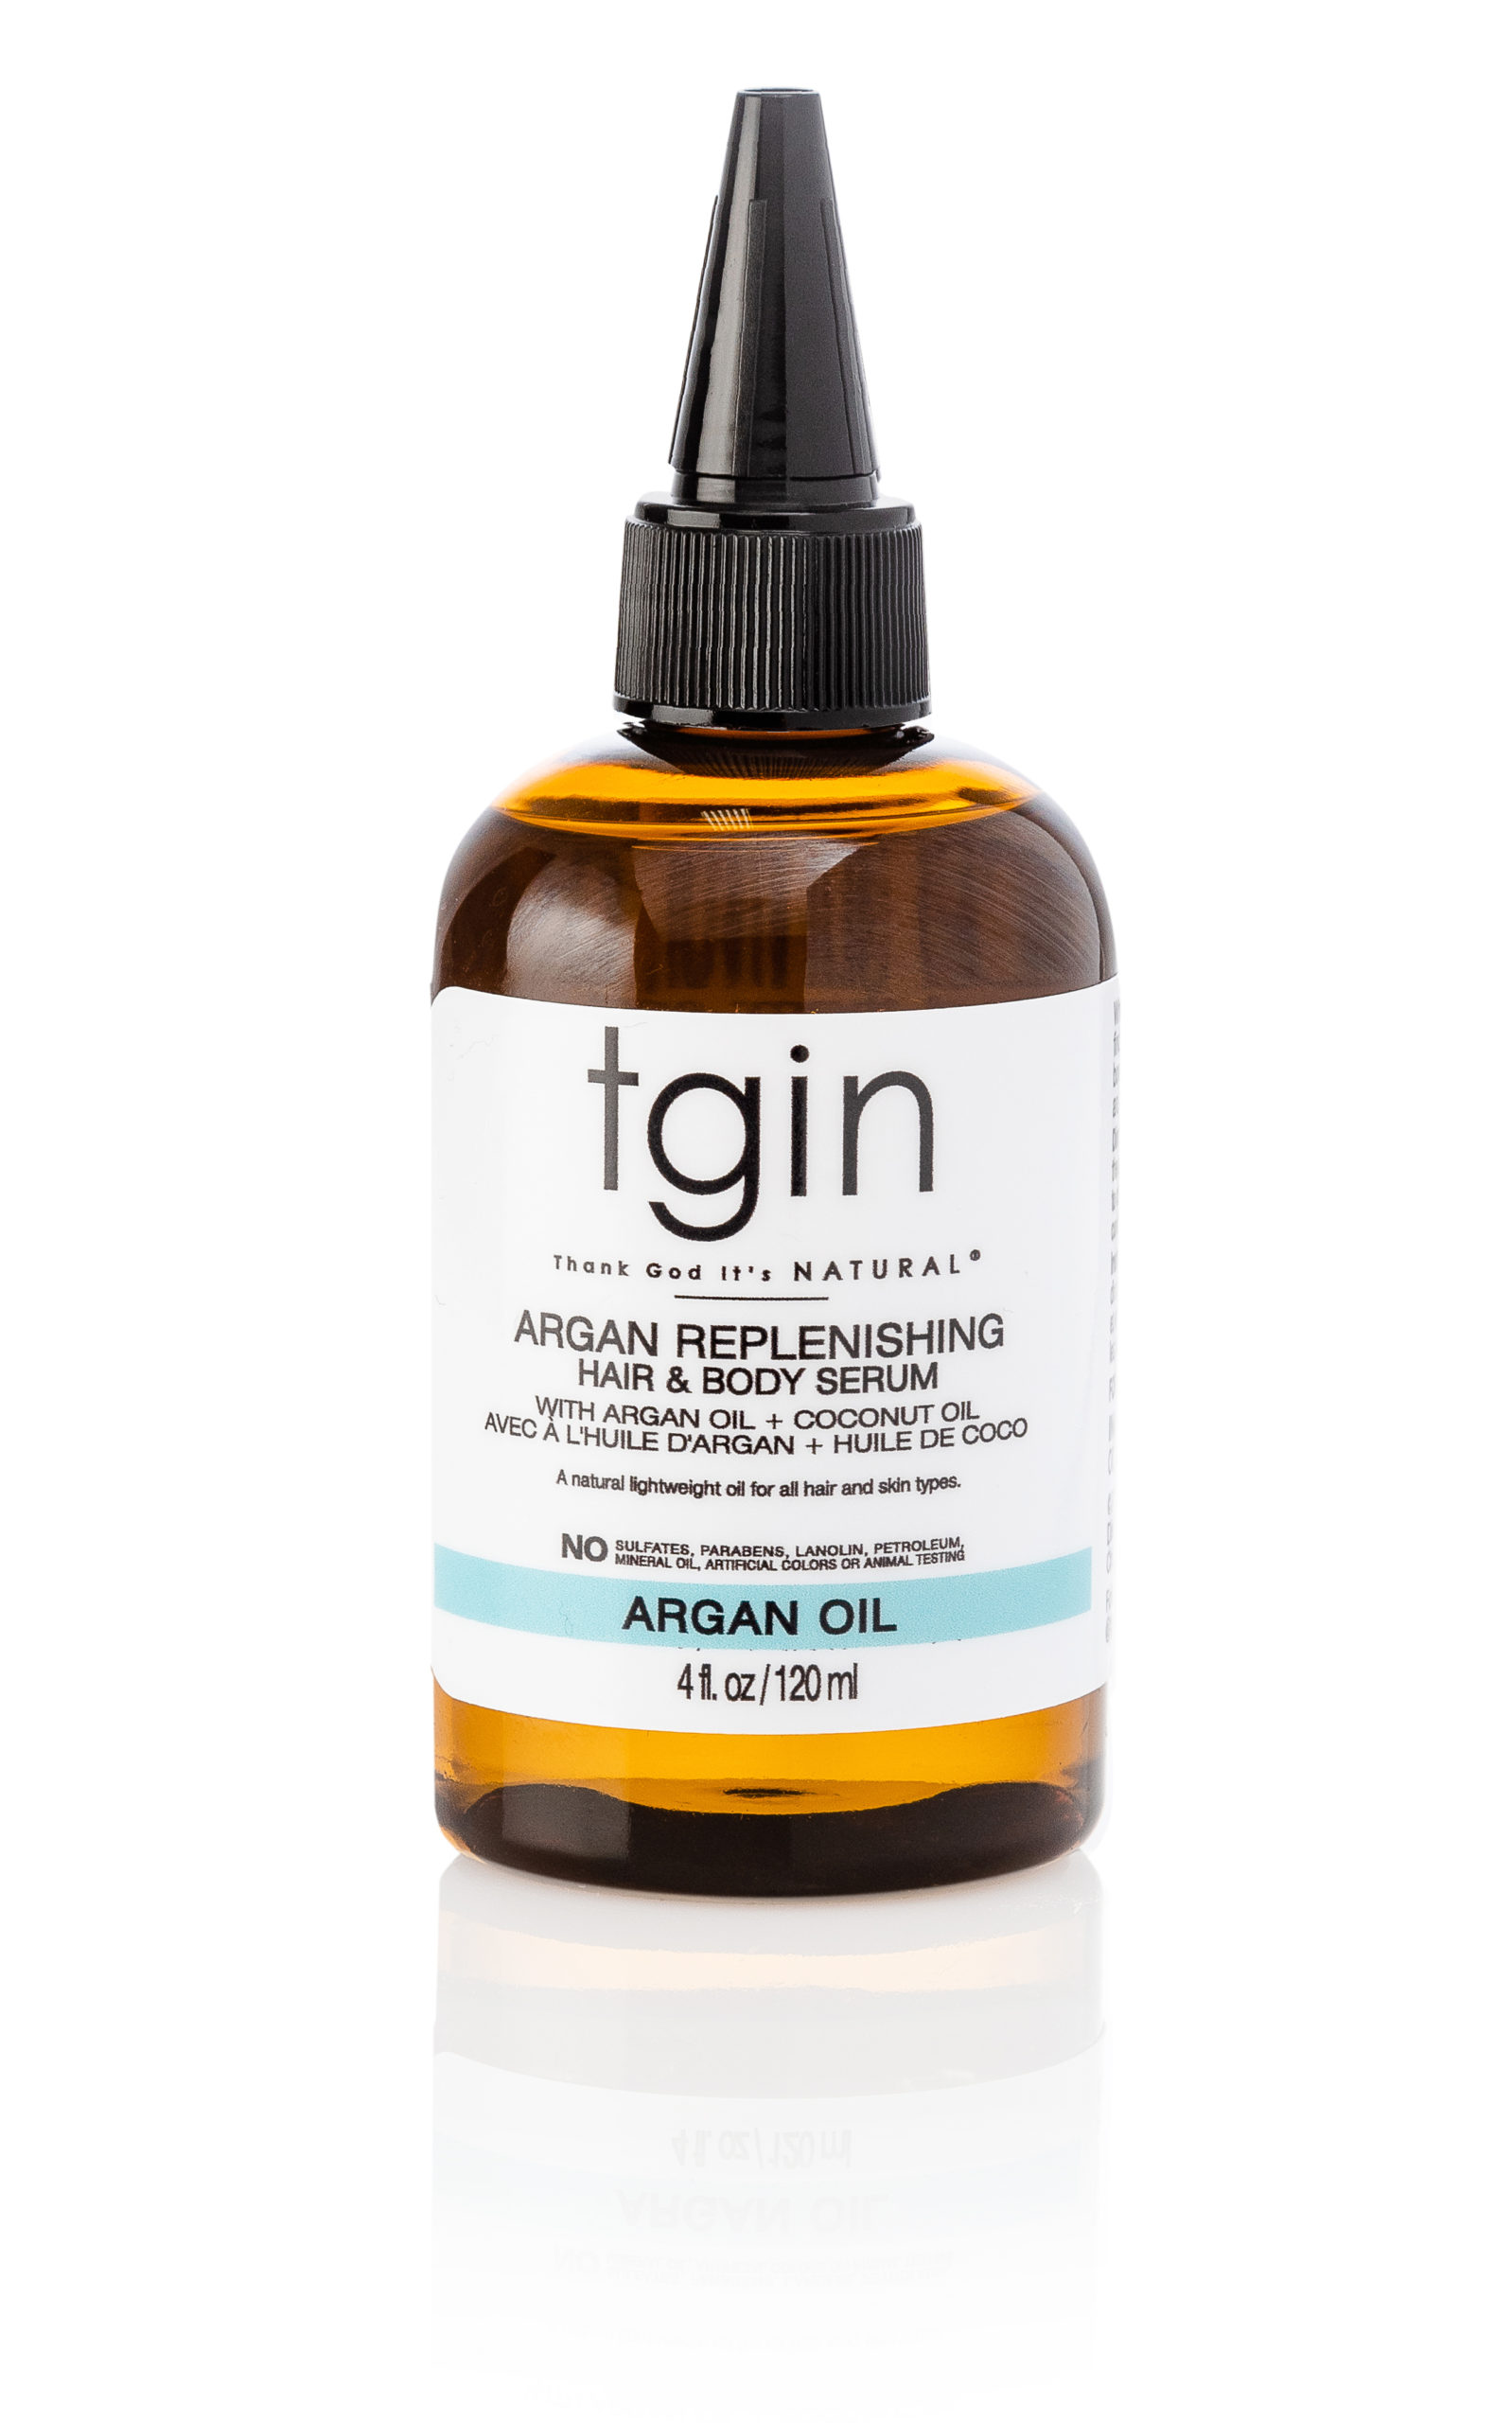 tgin Argan Replenishing Hair And Body Serum For Natural Hair